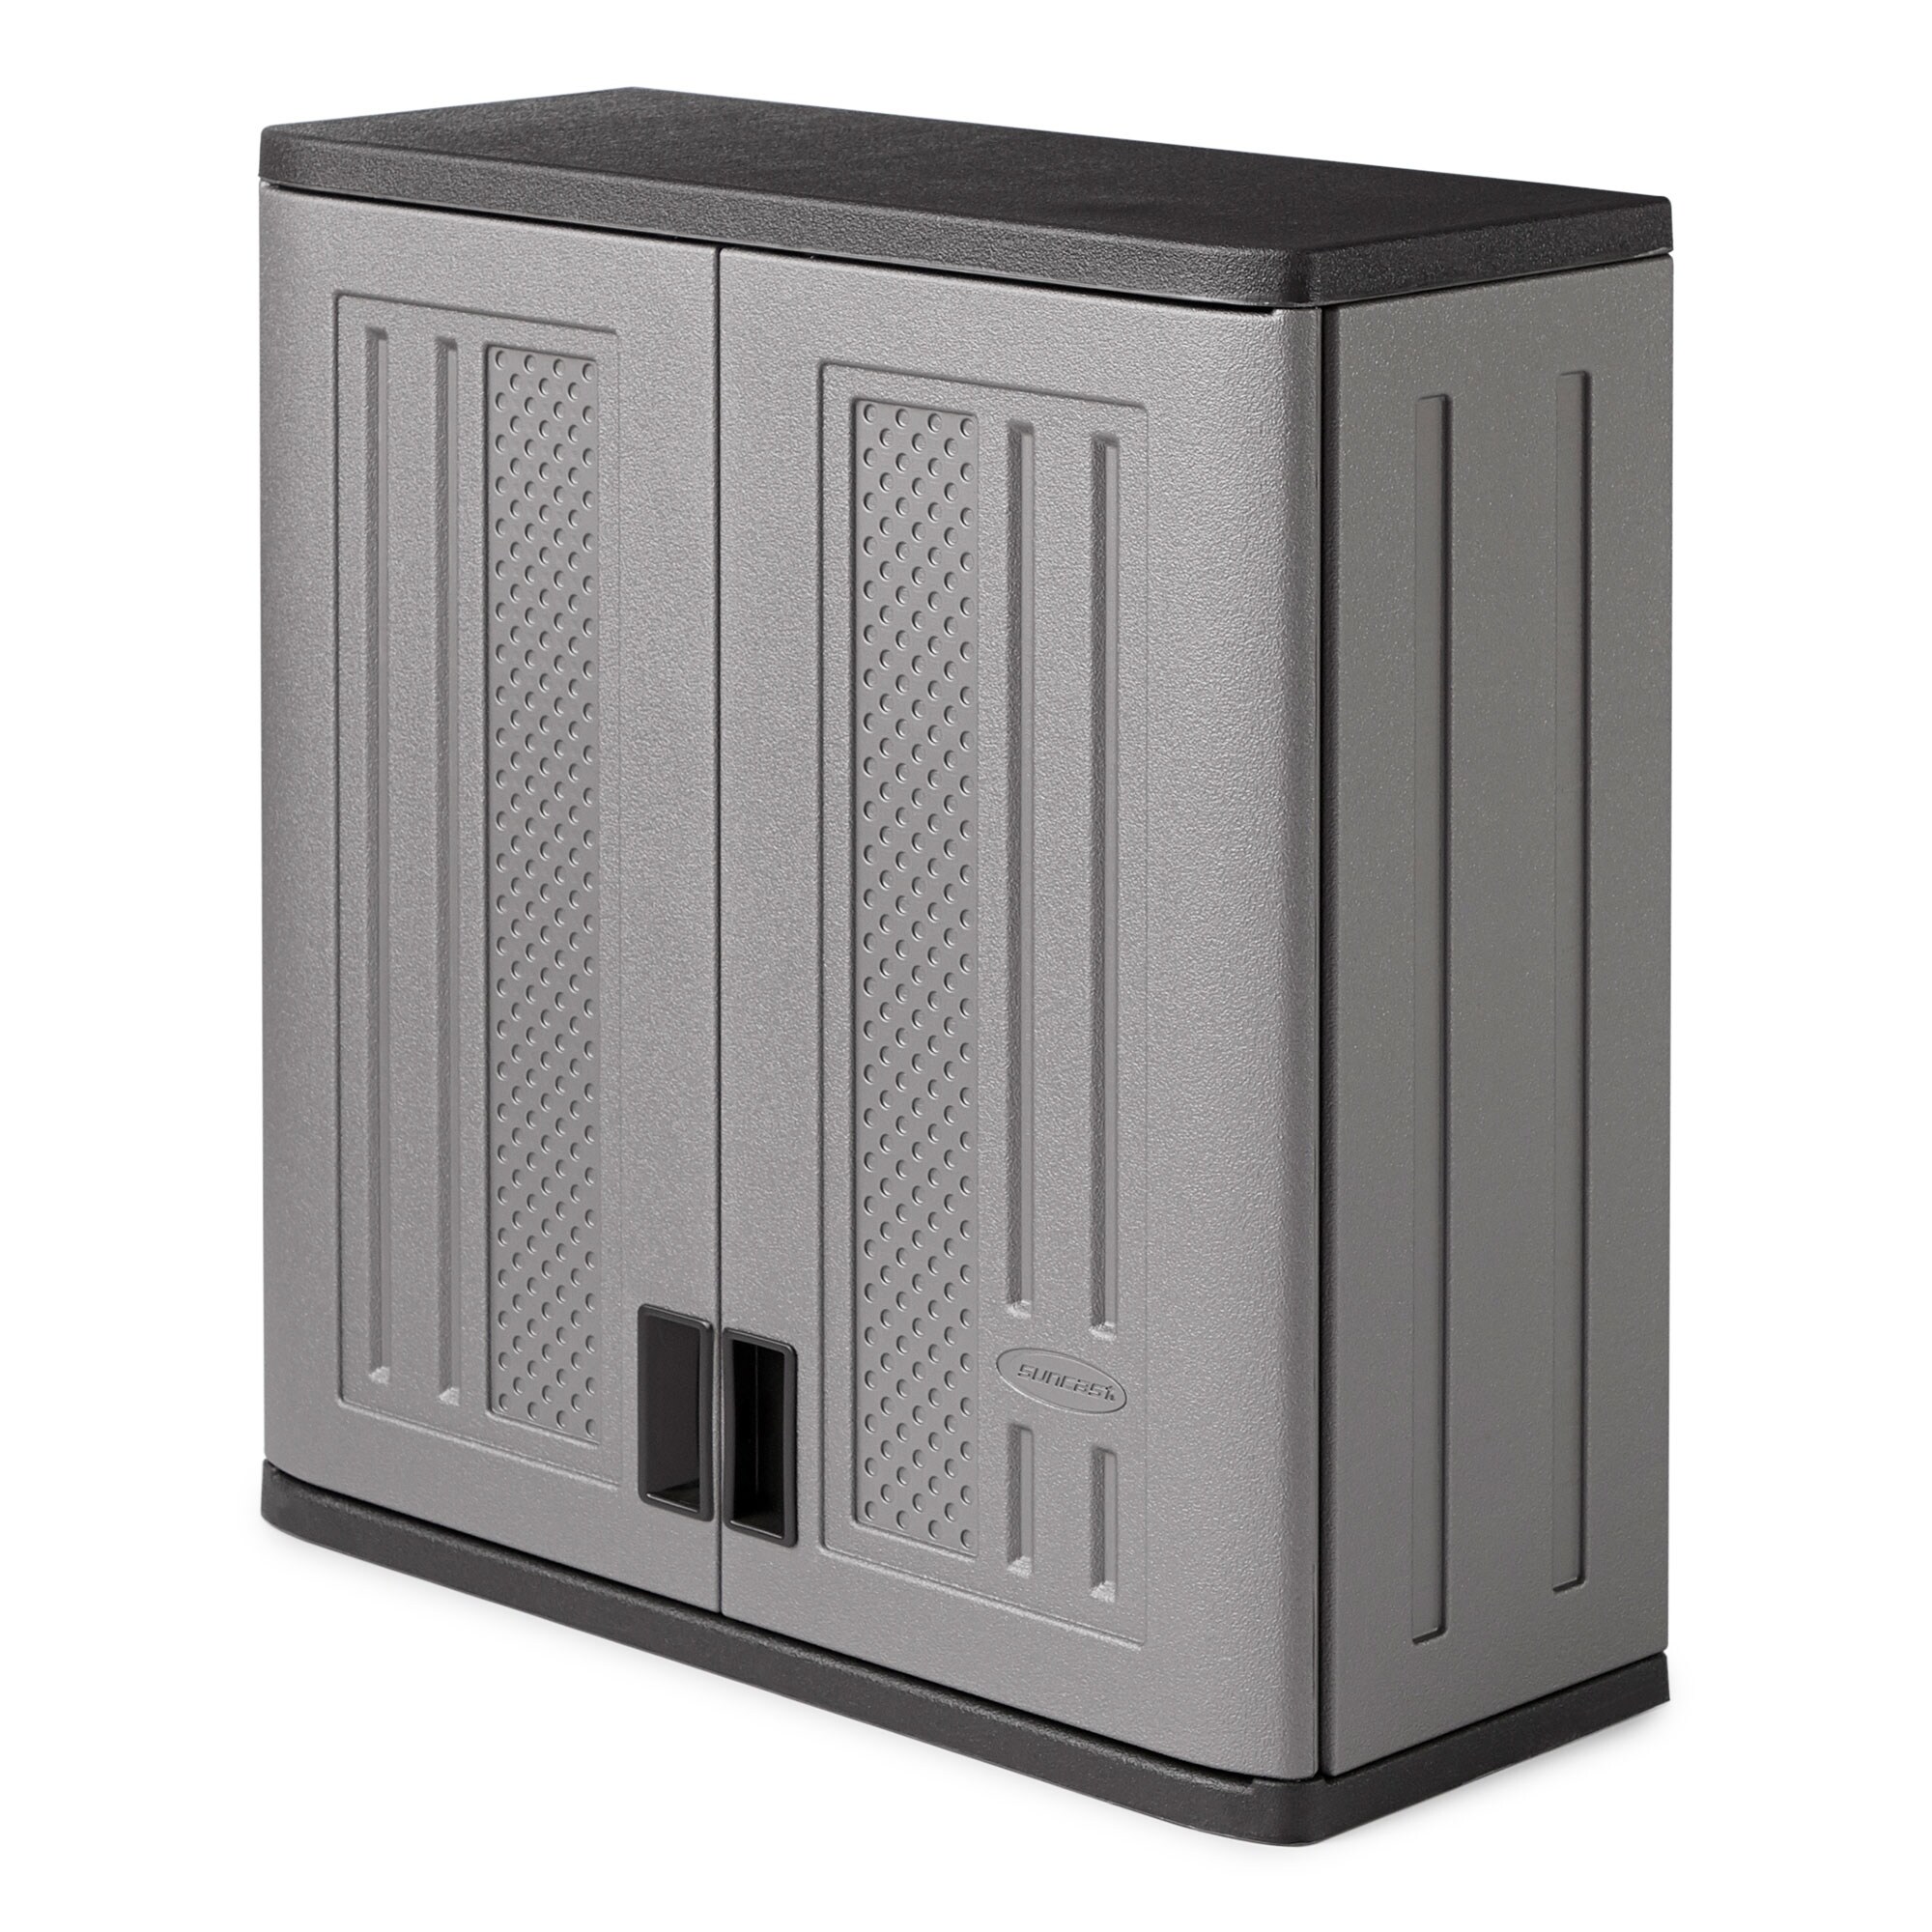 Suncast Wall Storage Cabinet, Grey